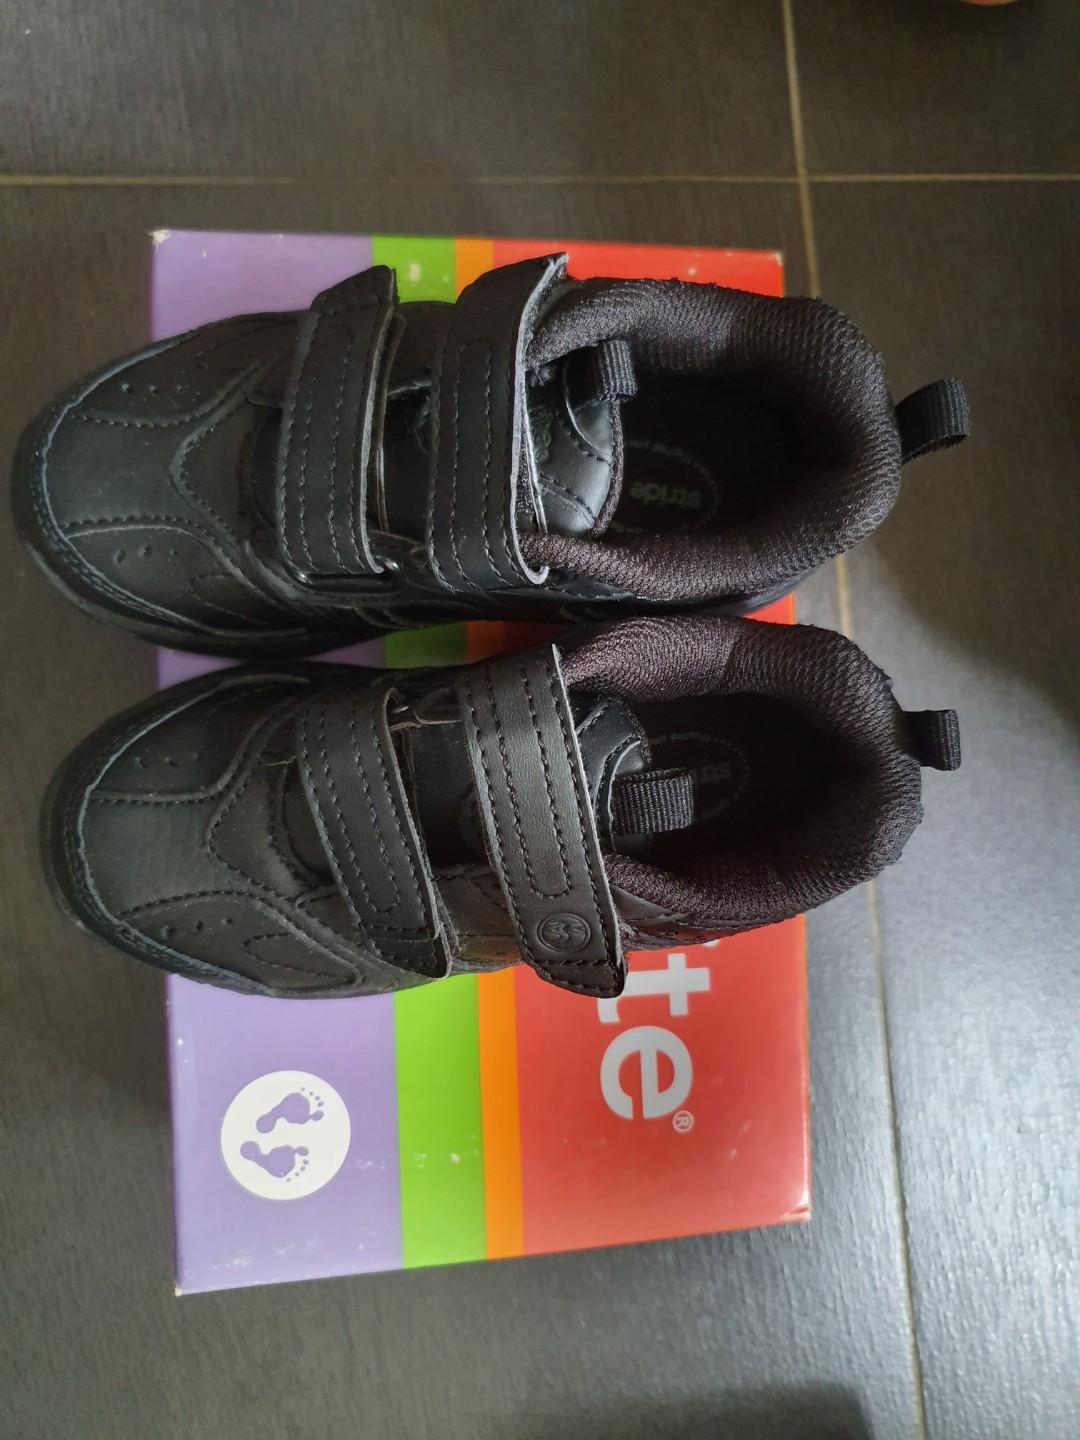 size 1 boys school shoes